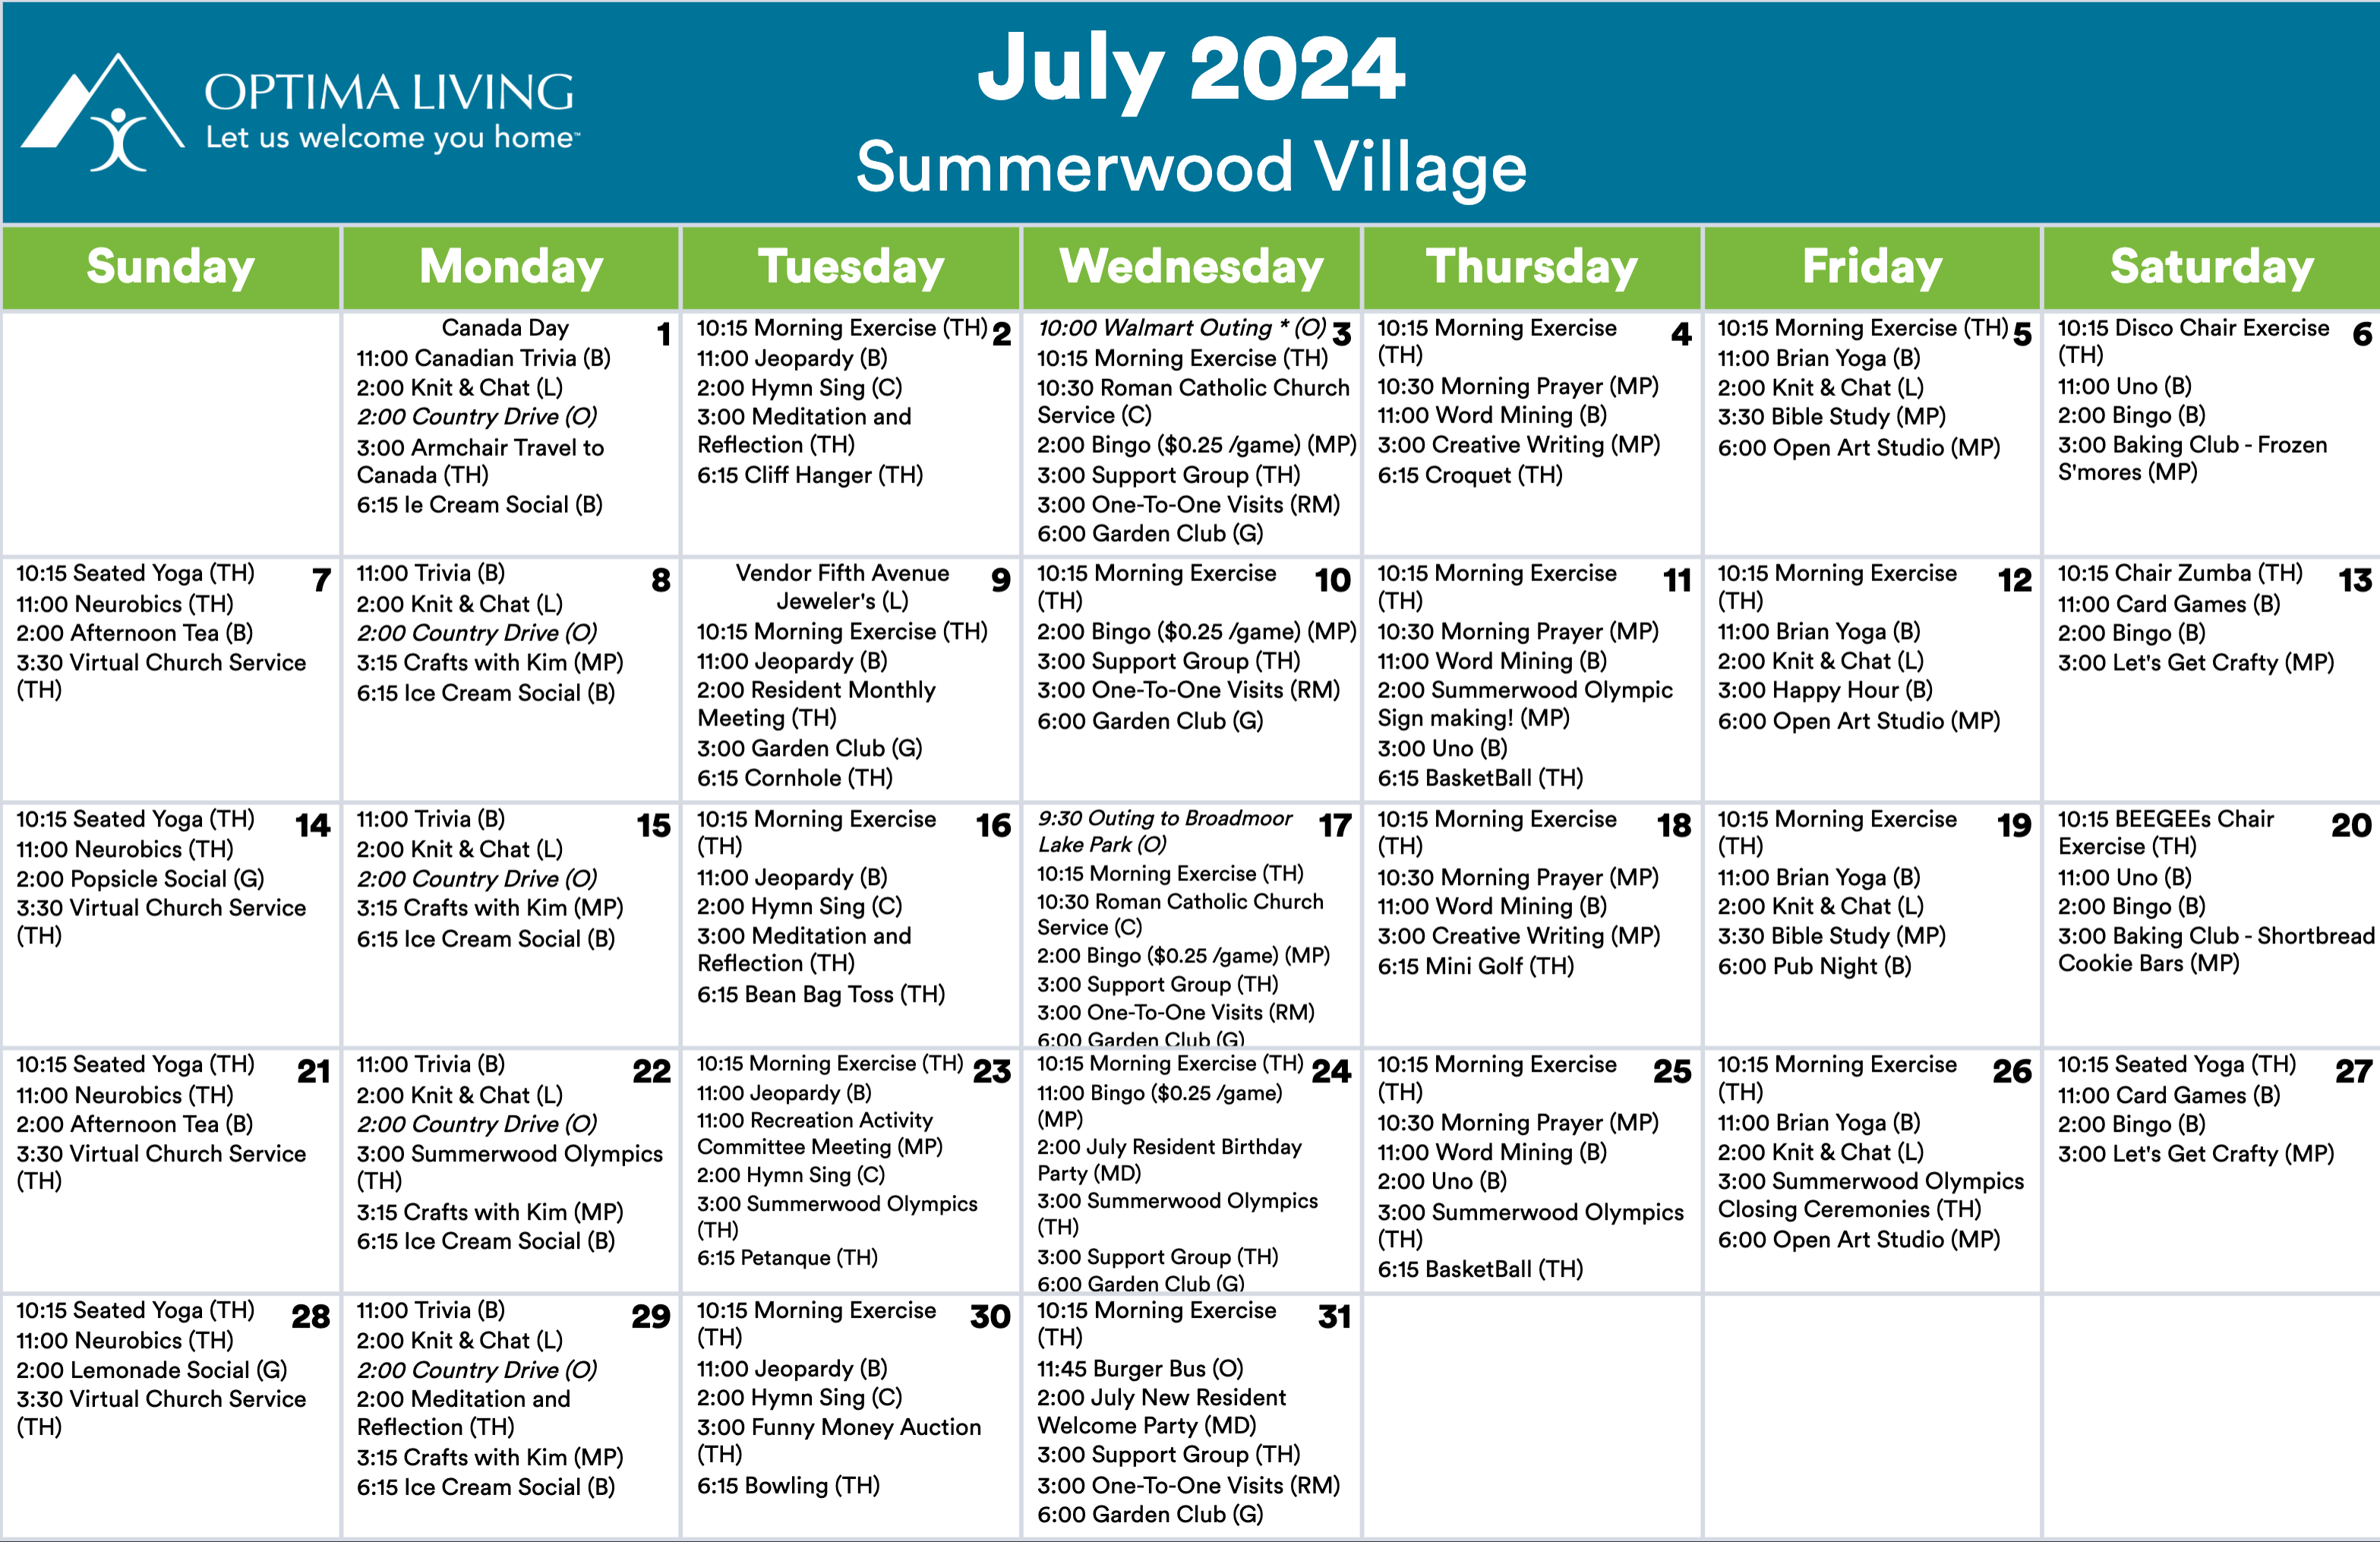 Summerwood Village July 2024 event calendar